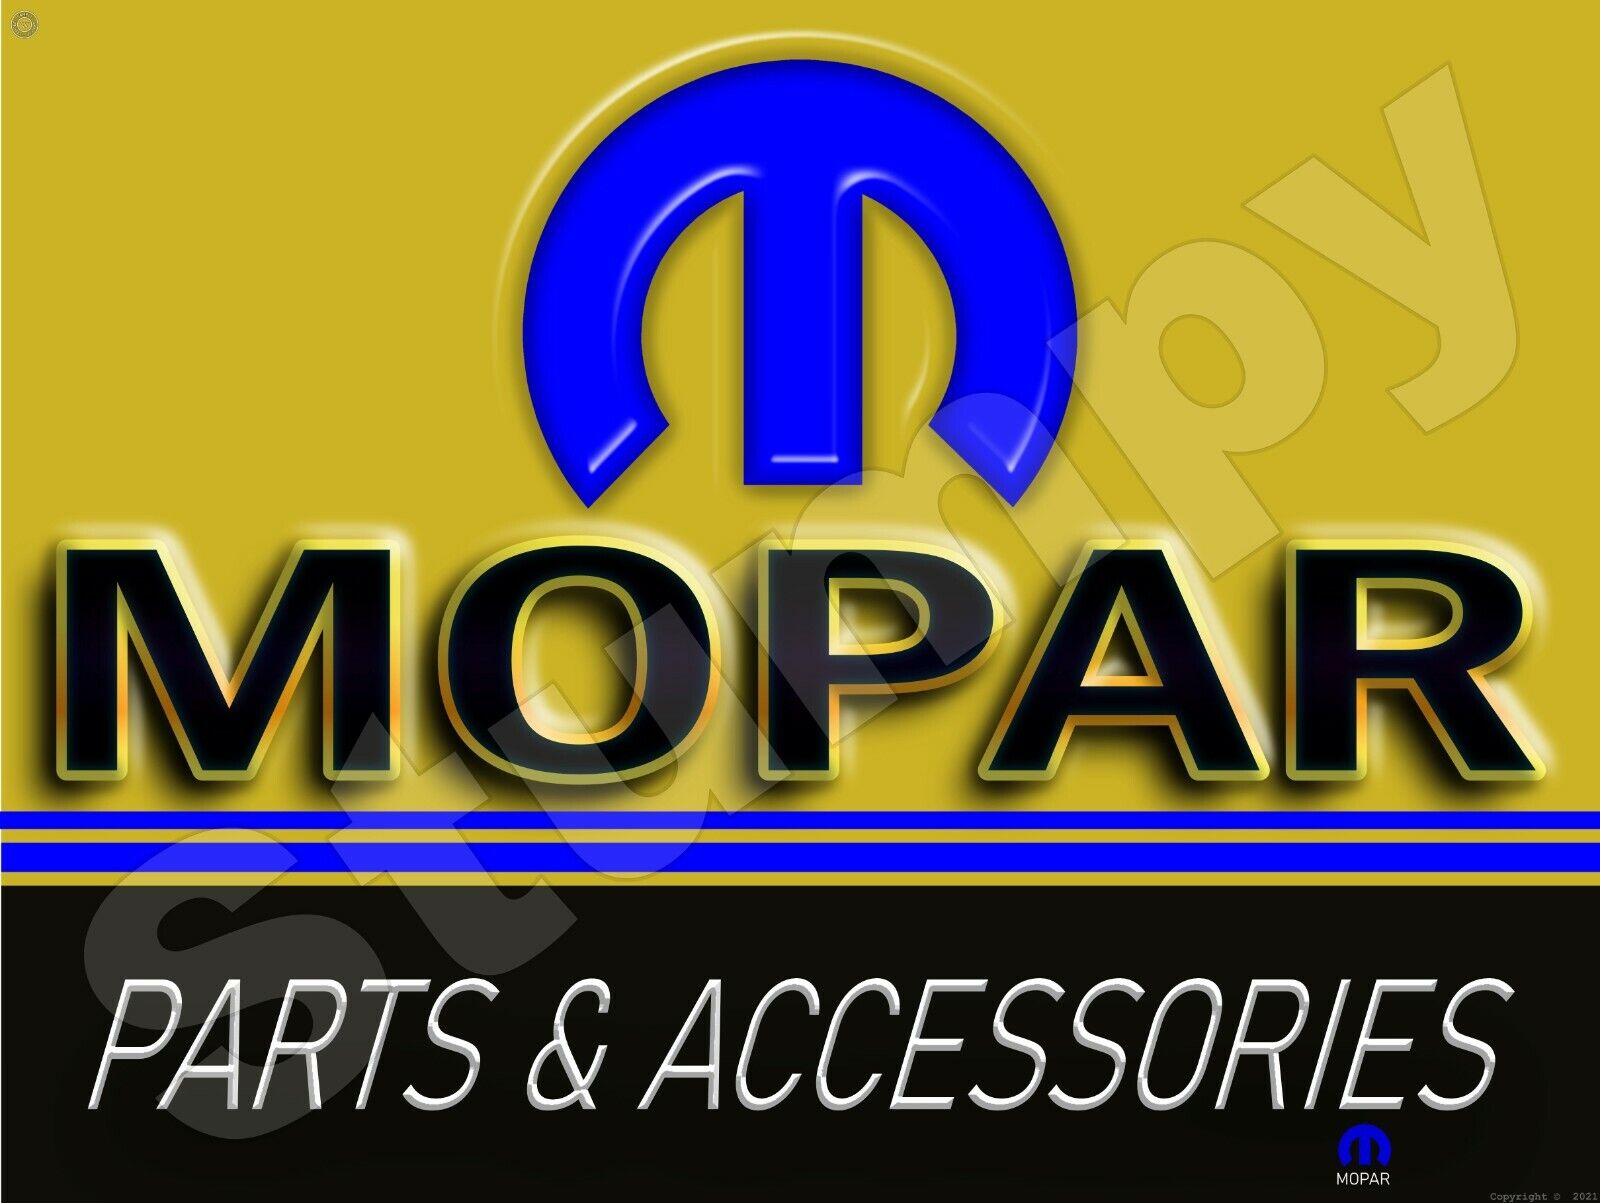 Mopar Parts & Accessories Metal Sign 9